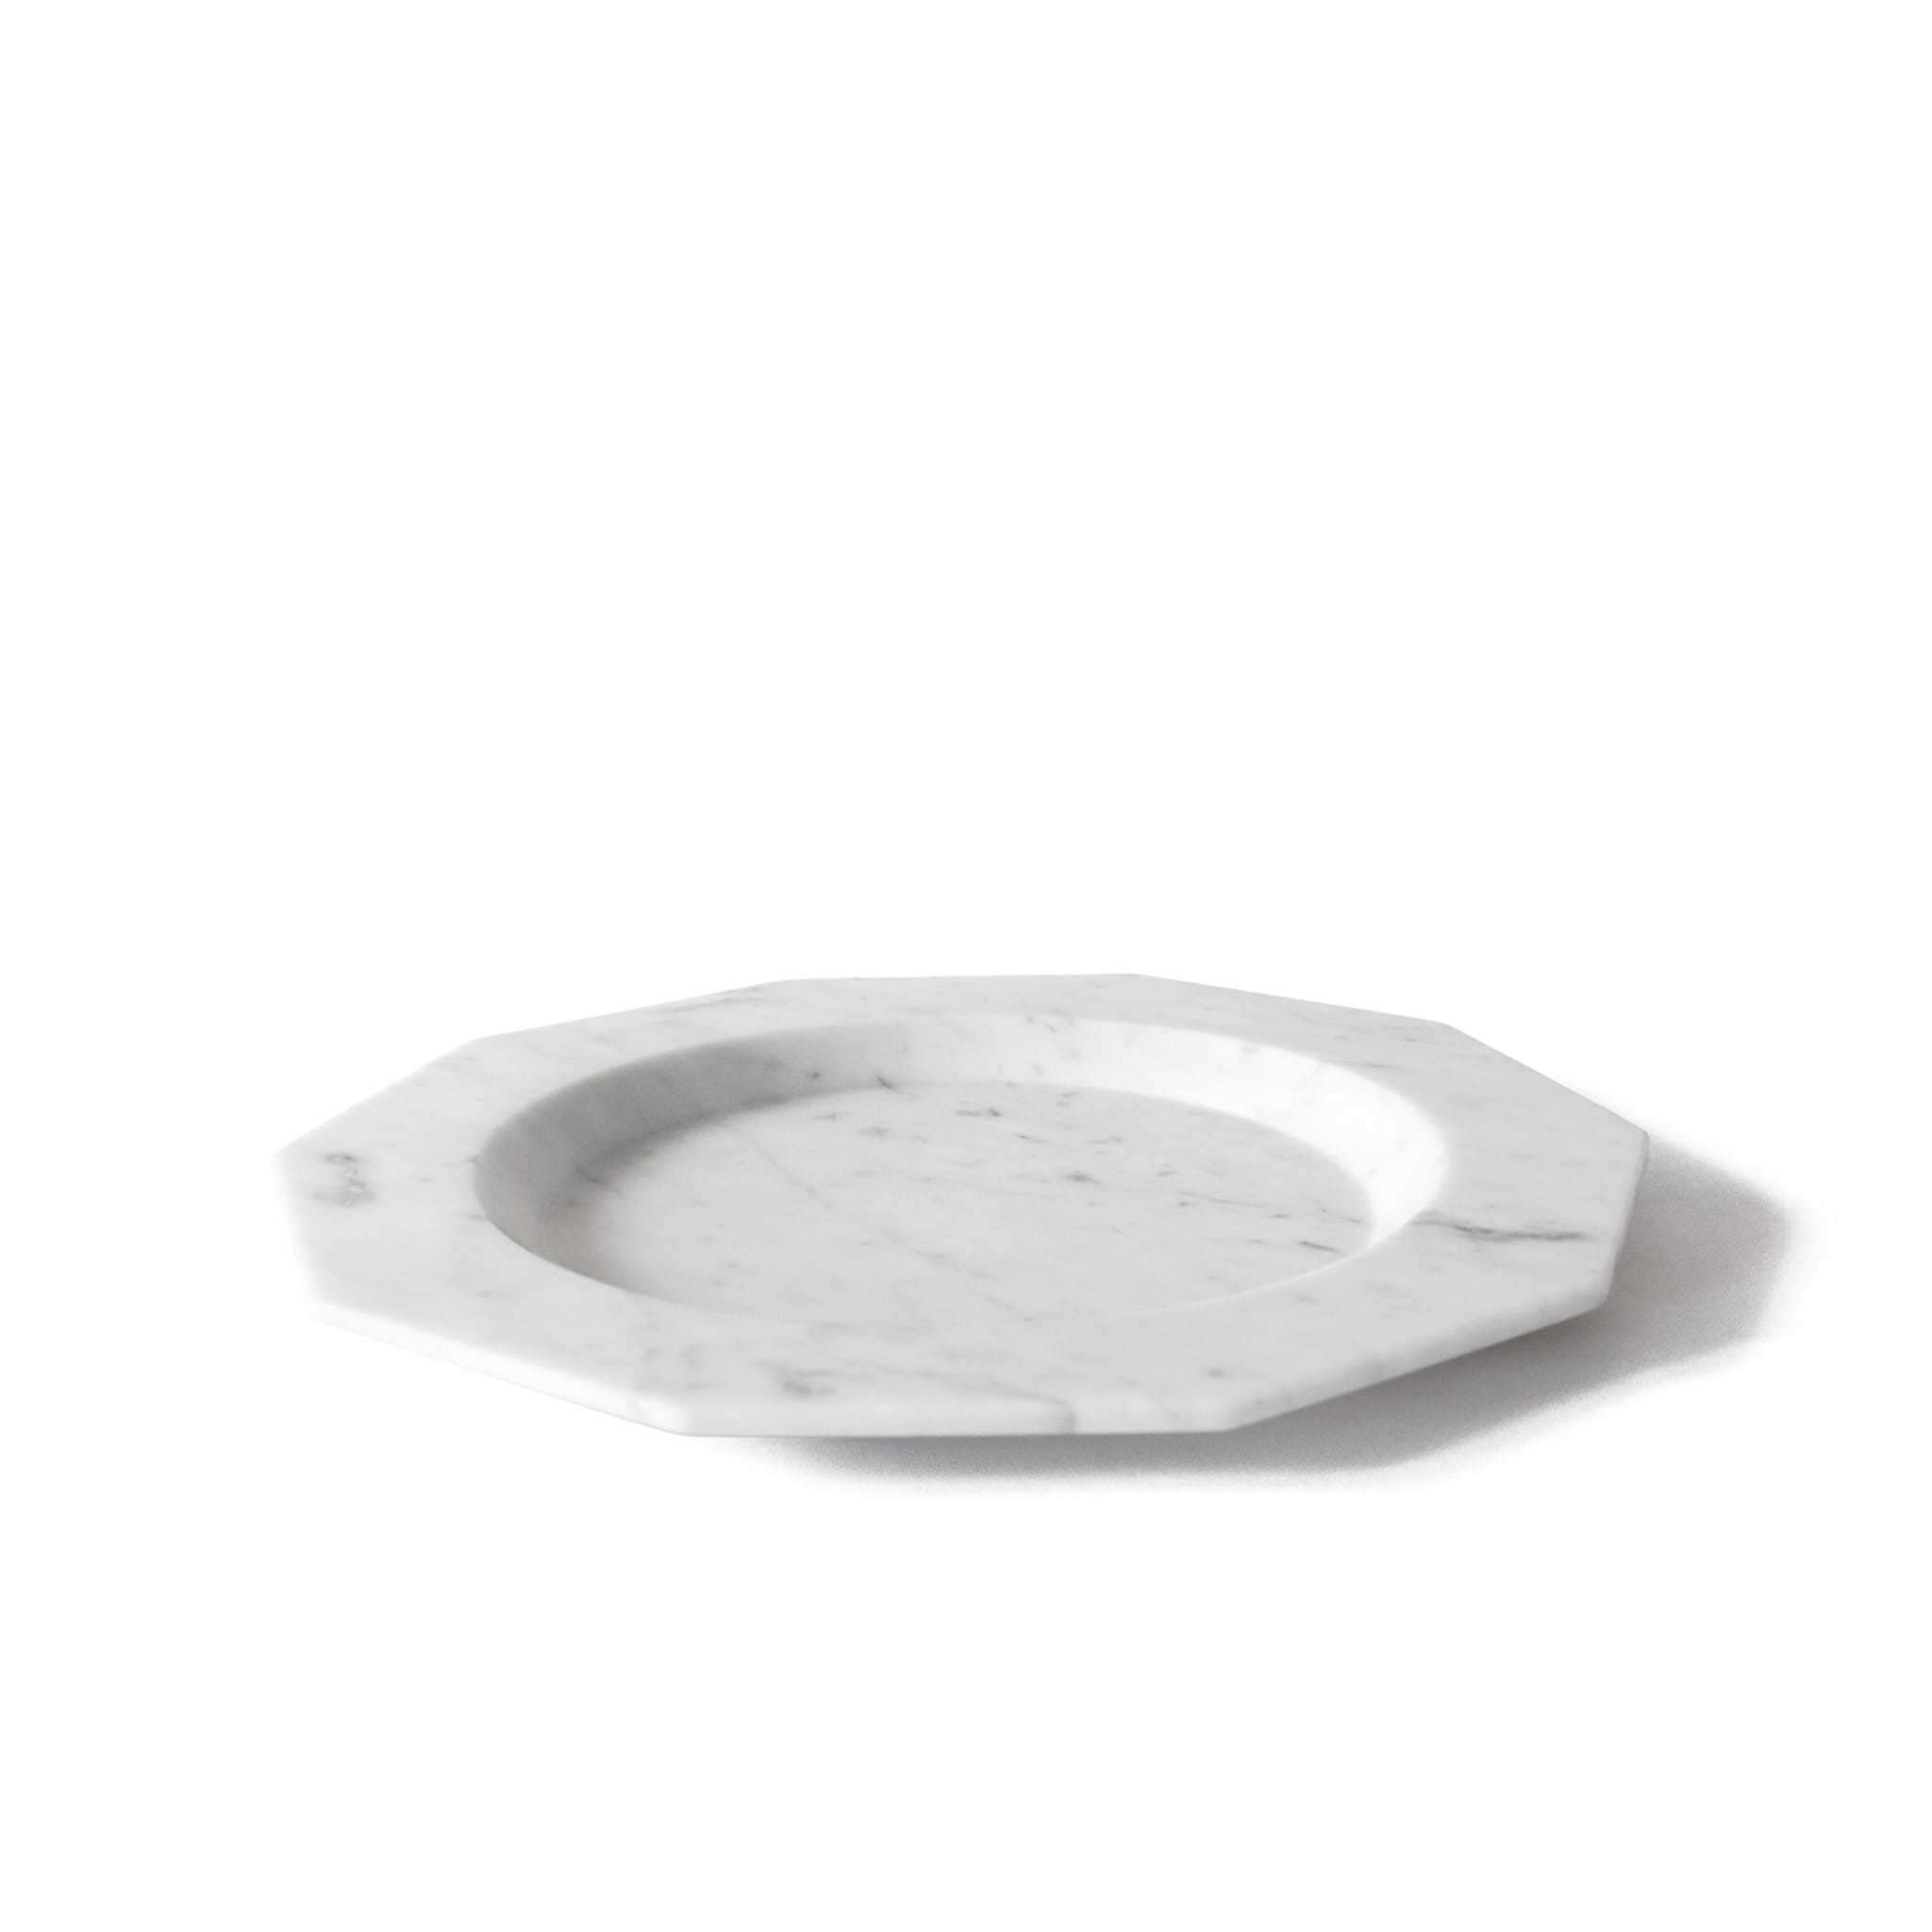 Dinner Plate in white Carrara marble - Alternative view 1